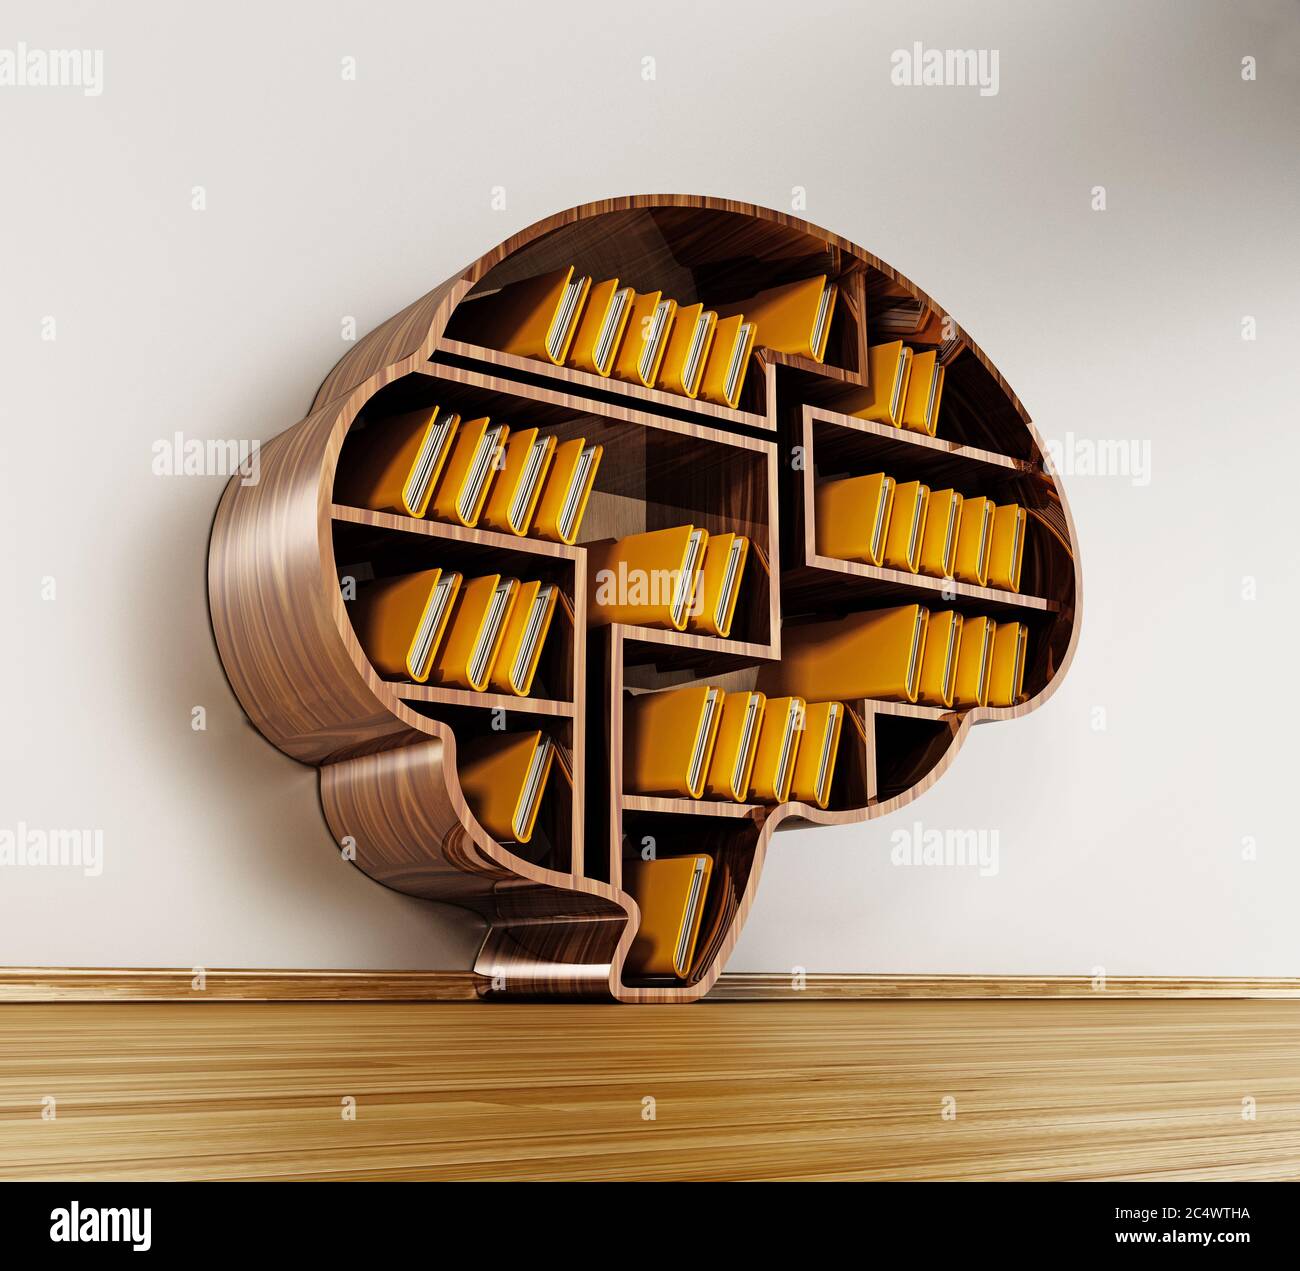 Bibliothek in Gehirnform voller Ordner. 3D-Illustration. Stockfoto